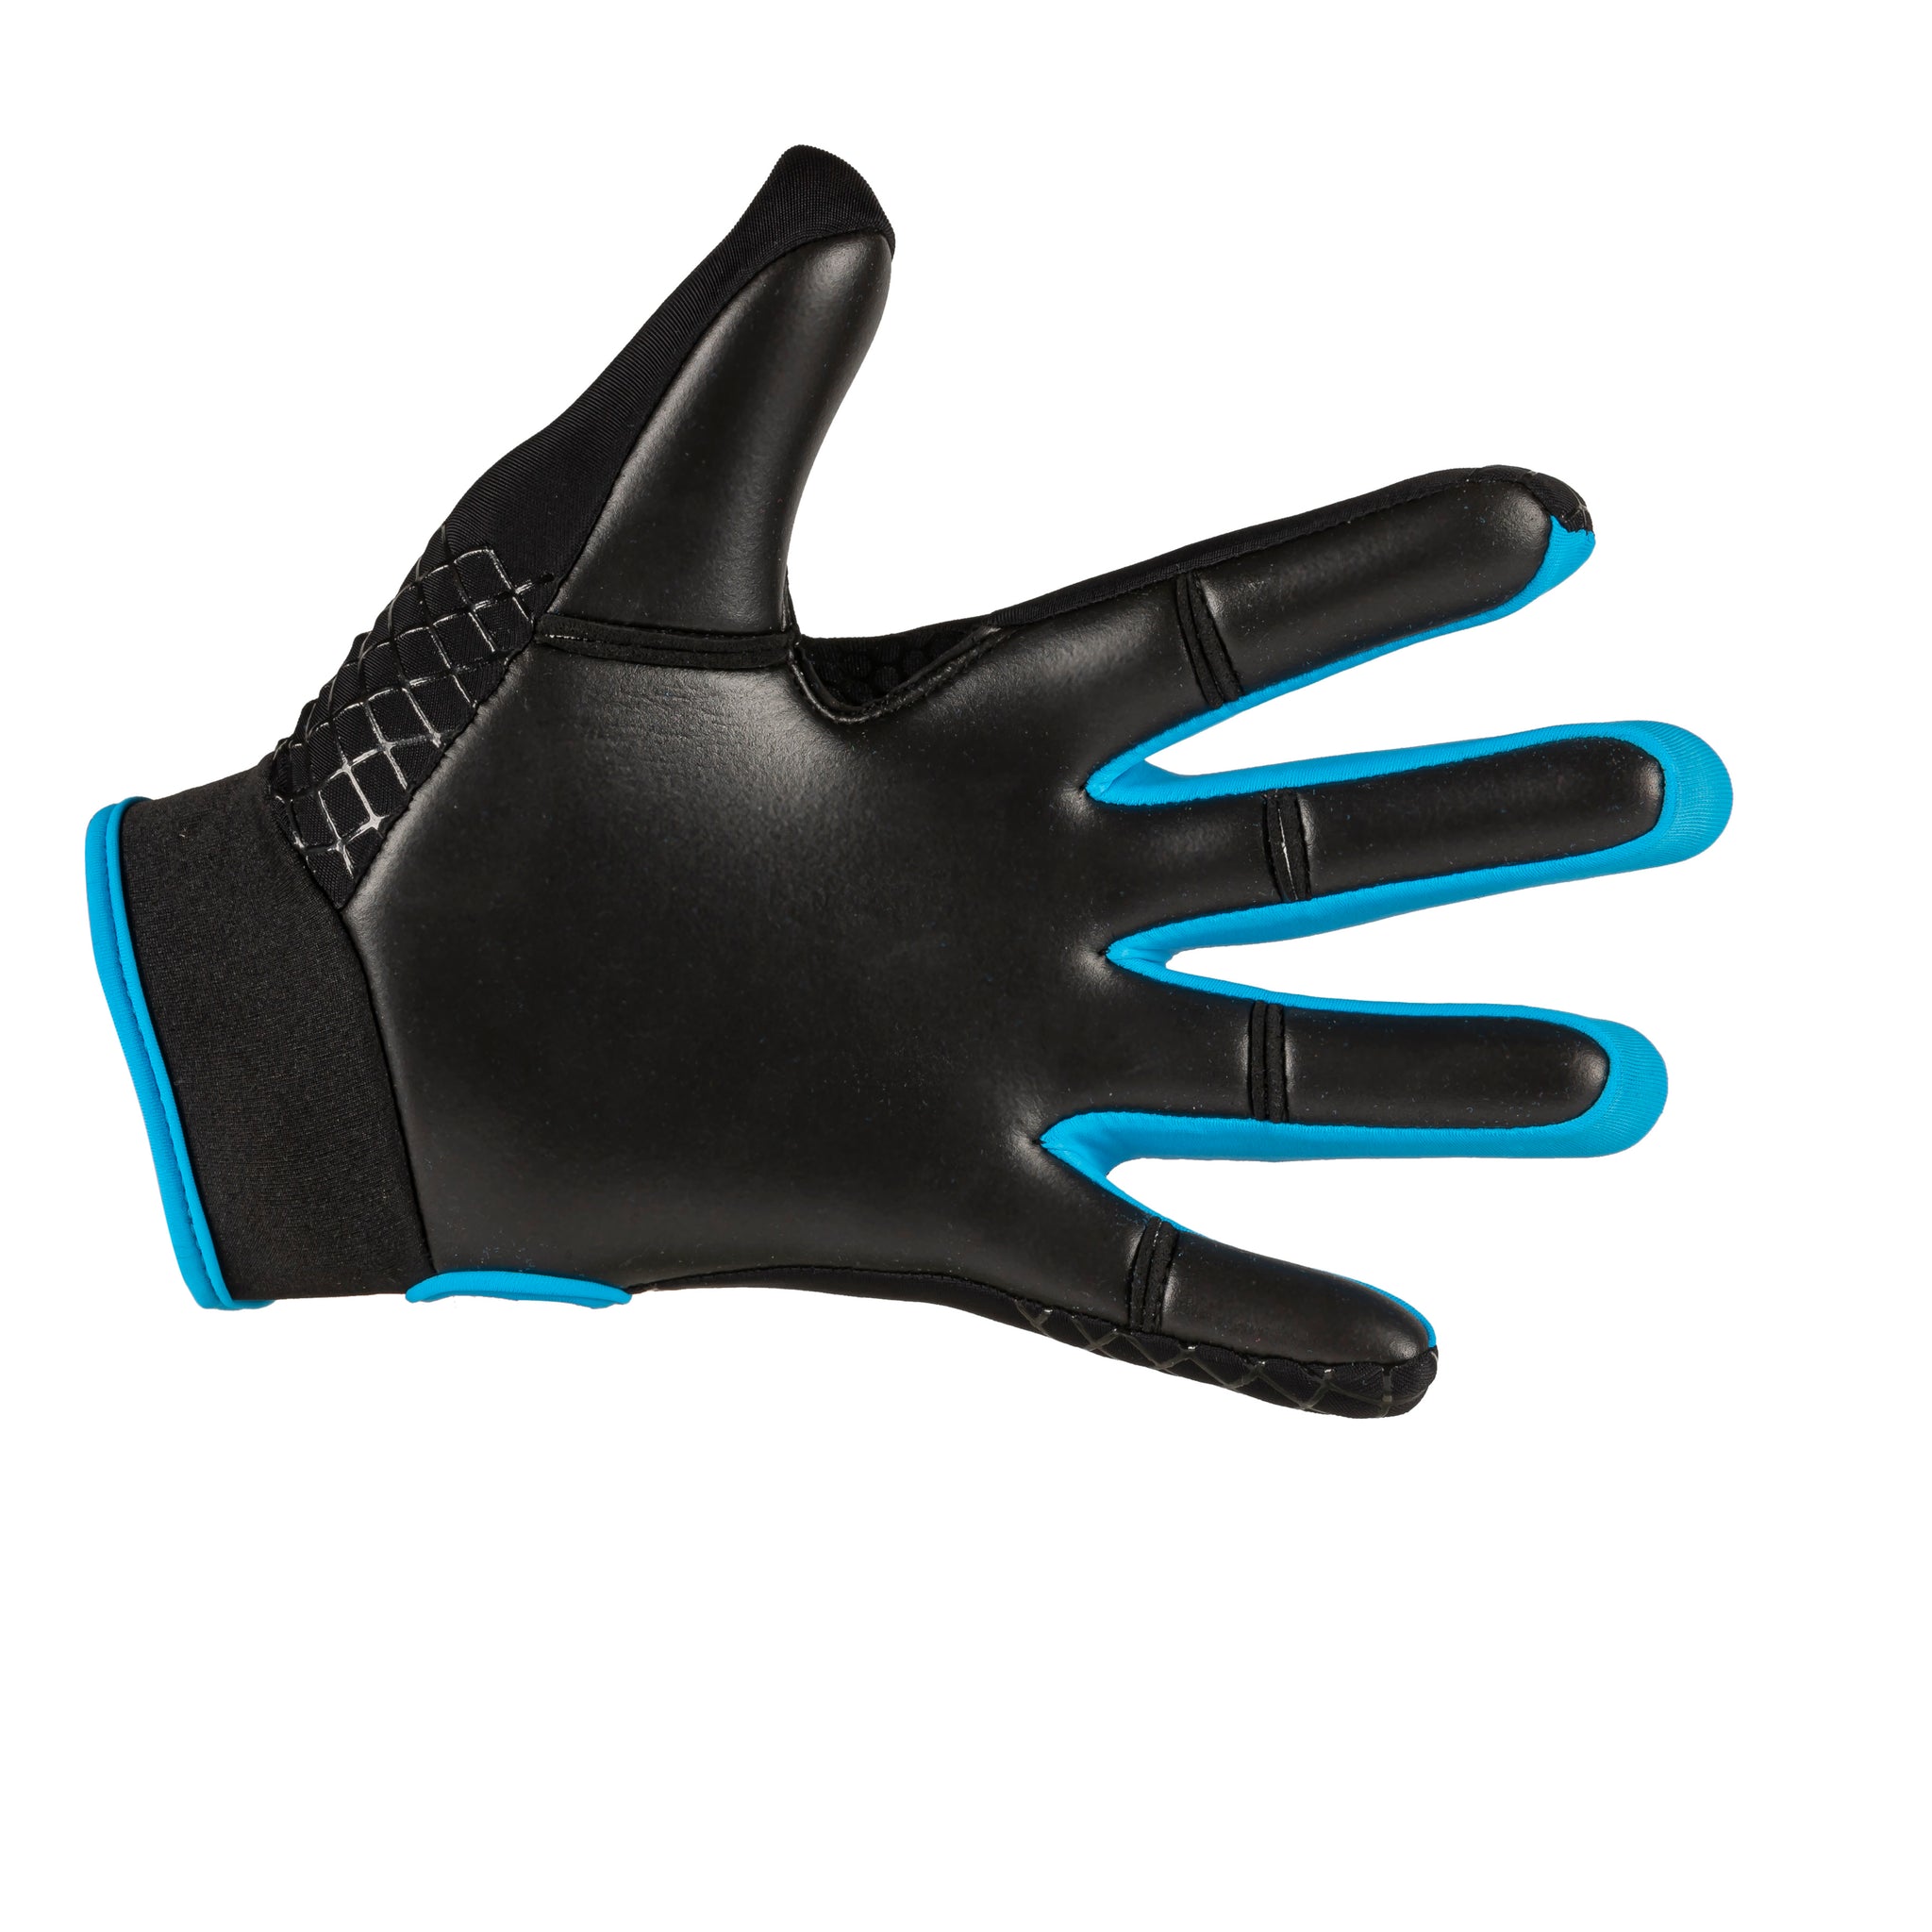 Karakal Web Gaelic Glove Black Blue